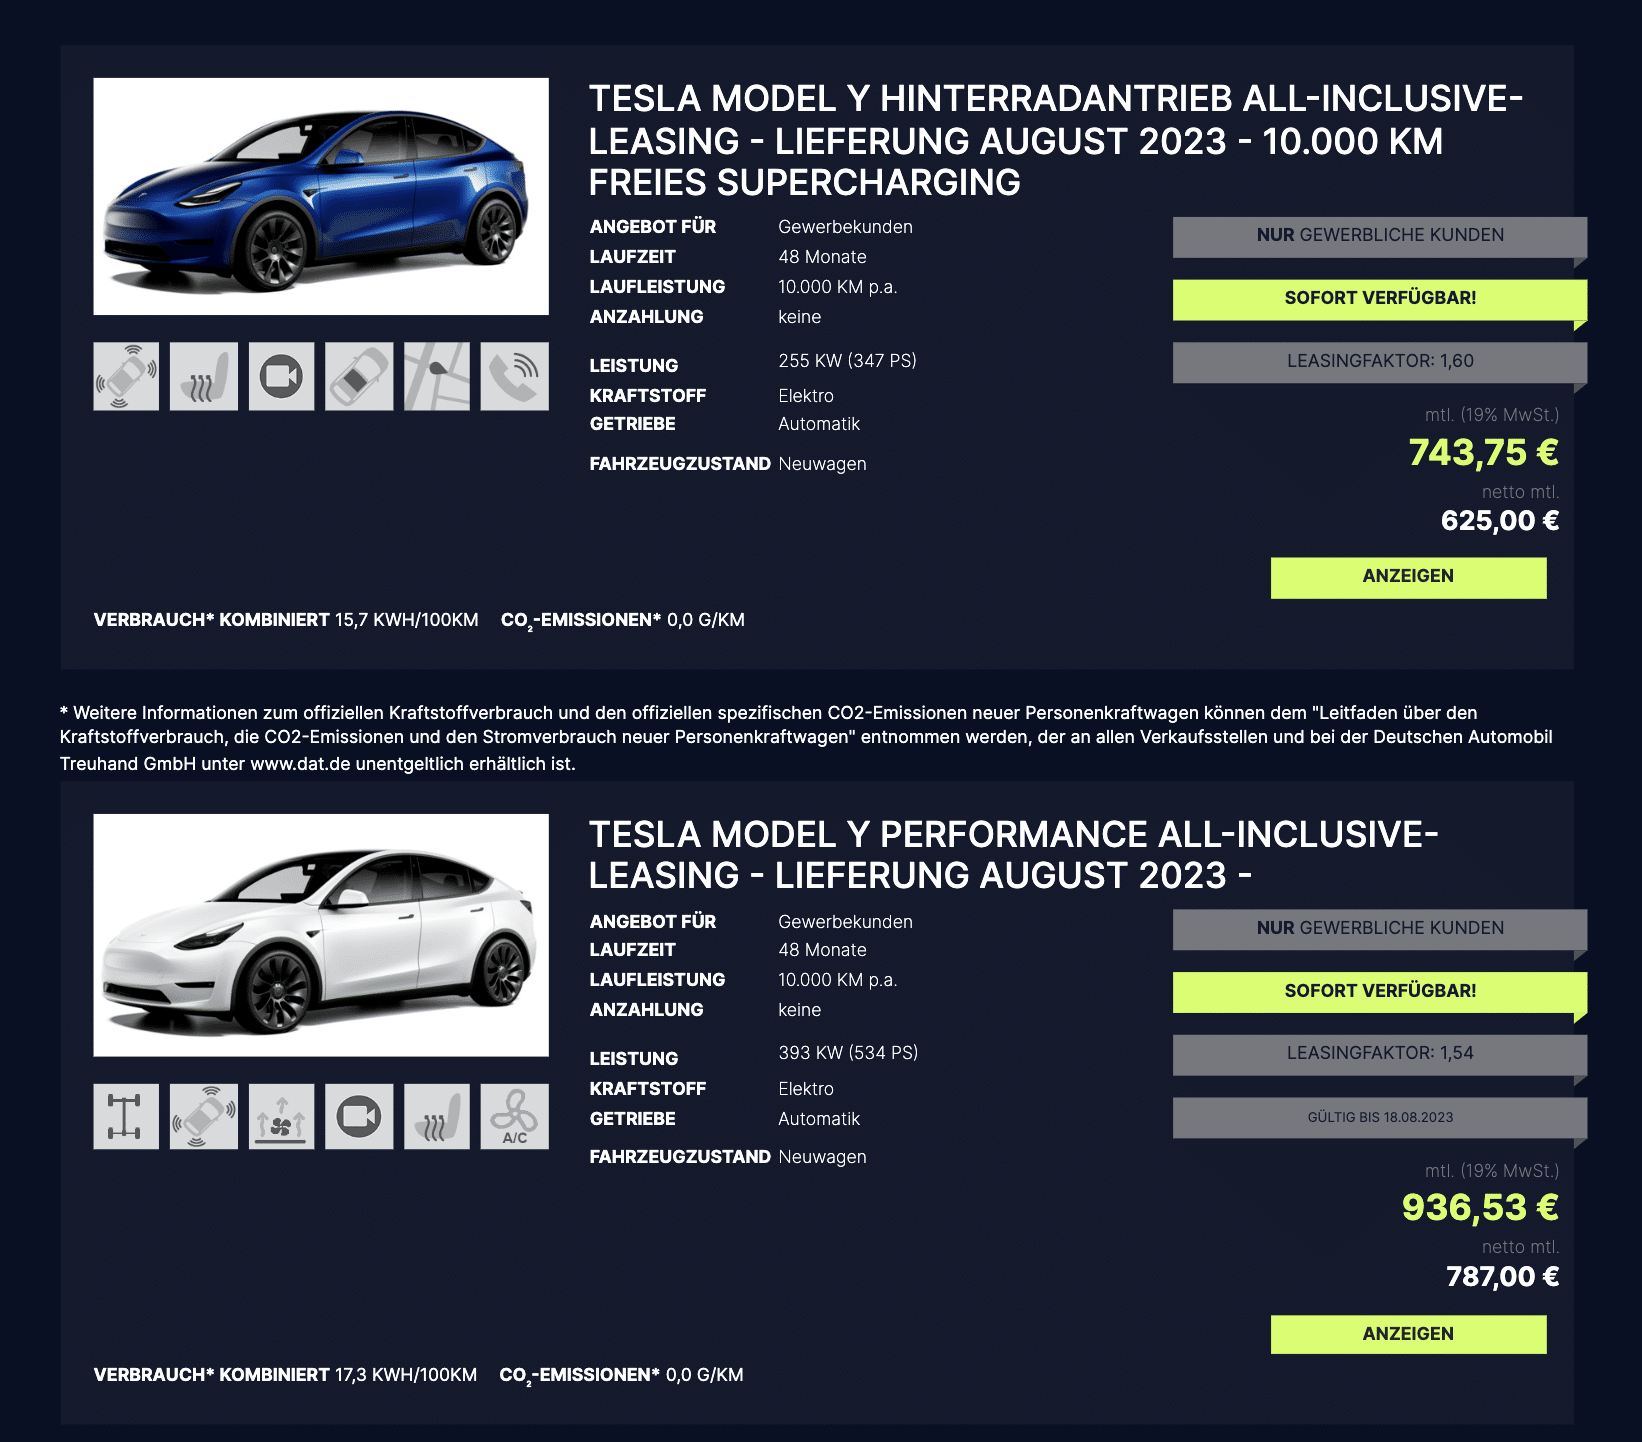 Tesla Model Y: All-inclusive-Leasing für Geschäftskunden - AUTO BILD